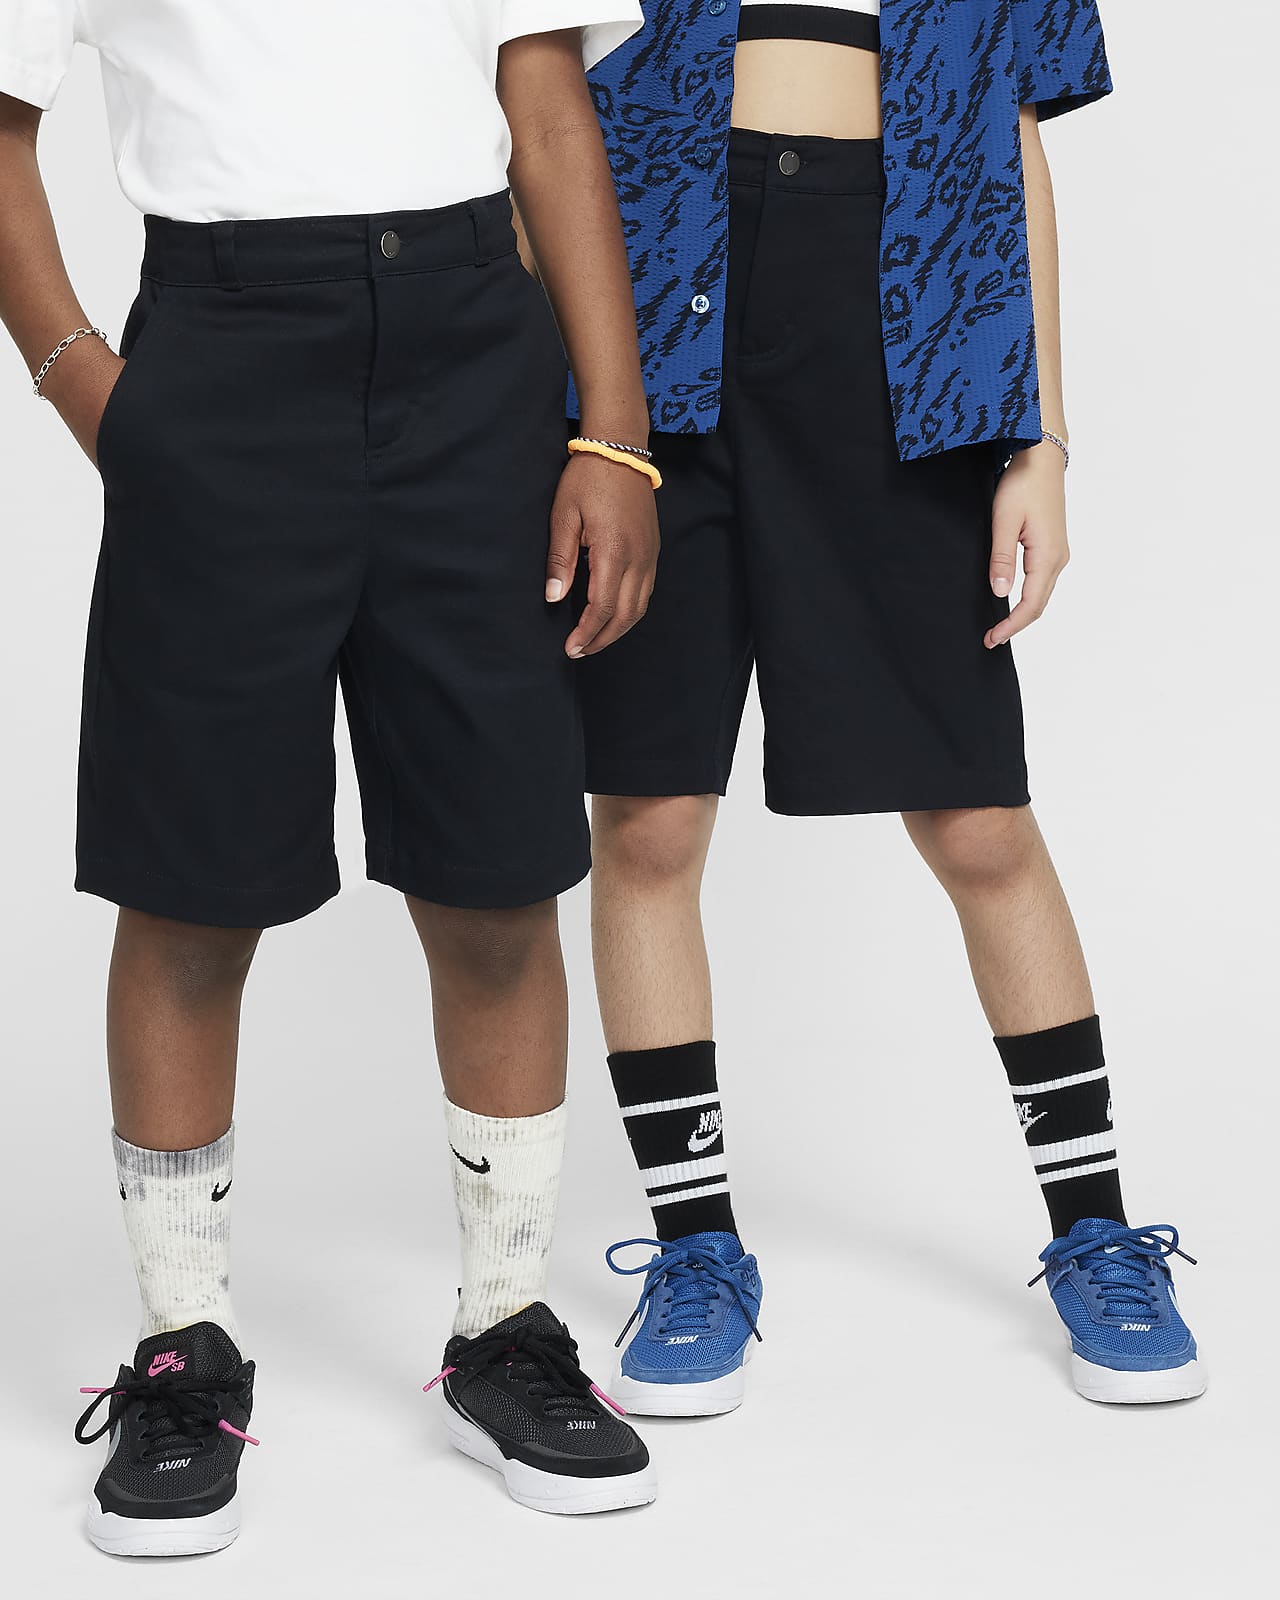 Nike SB Older Kids' Chino Skate Shorts